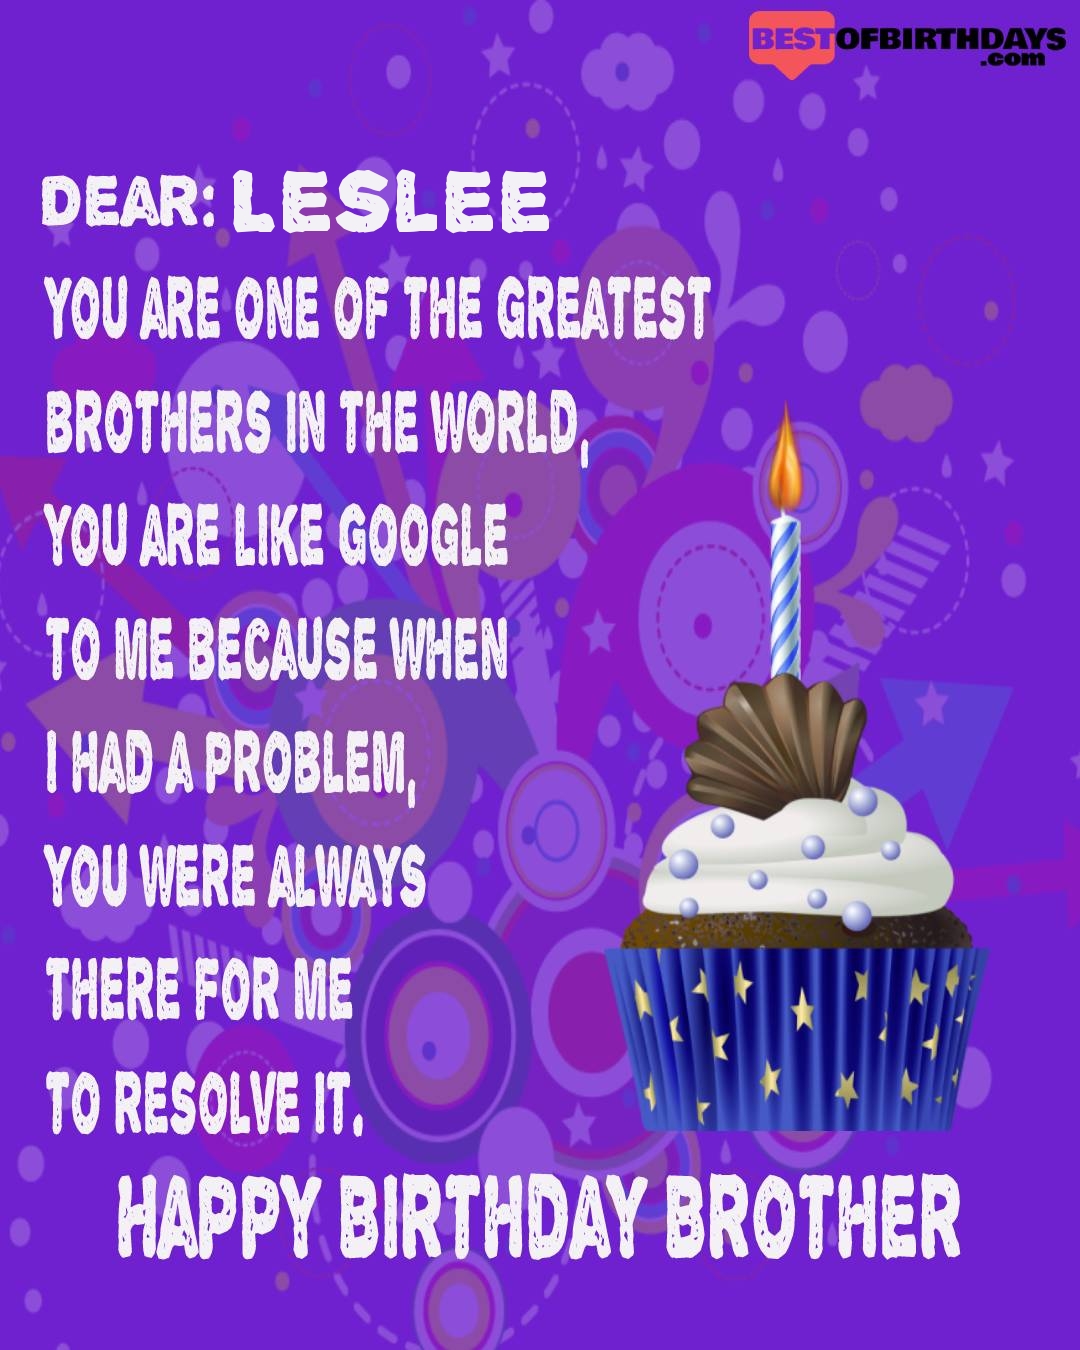 Happy birthday leslee bhai brother bro